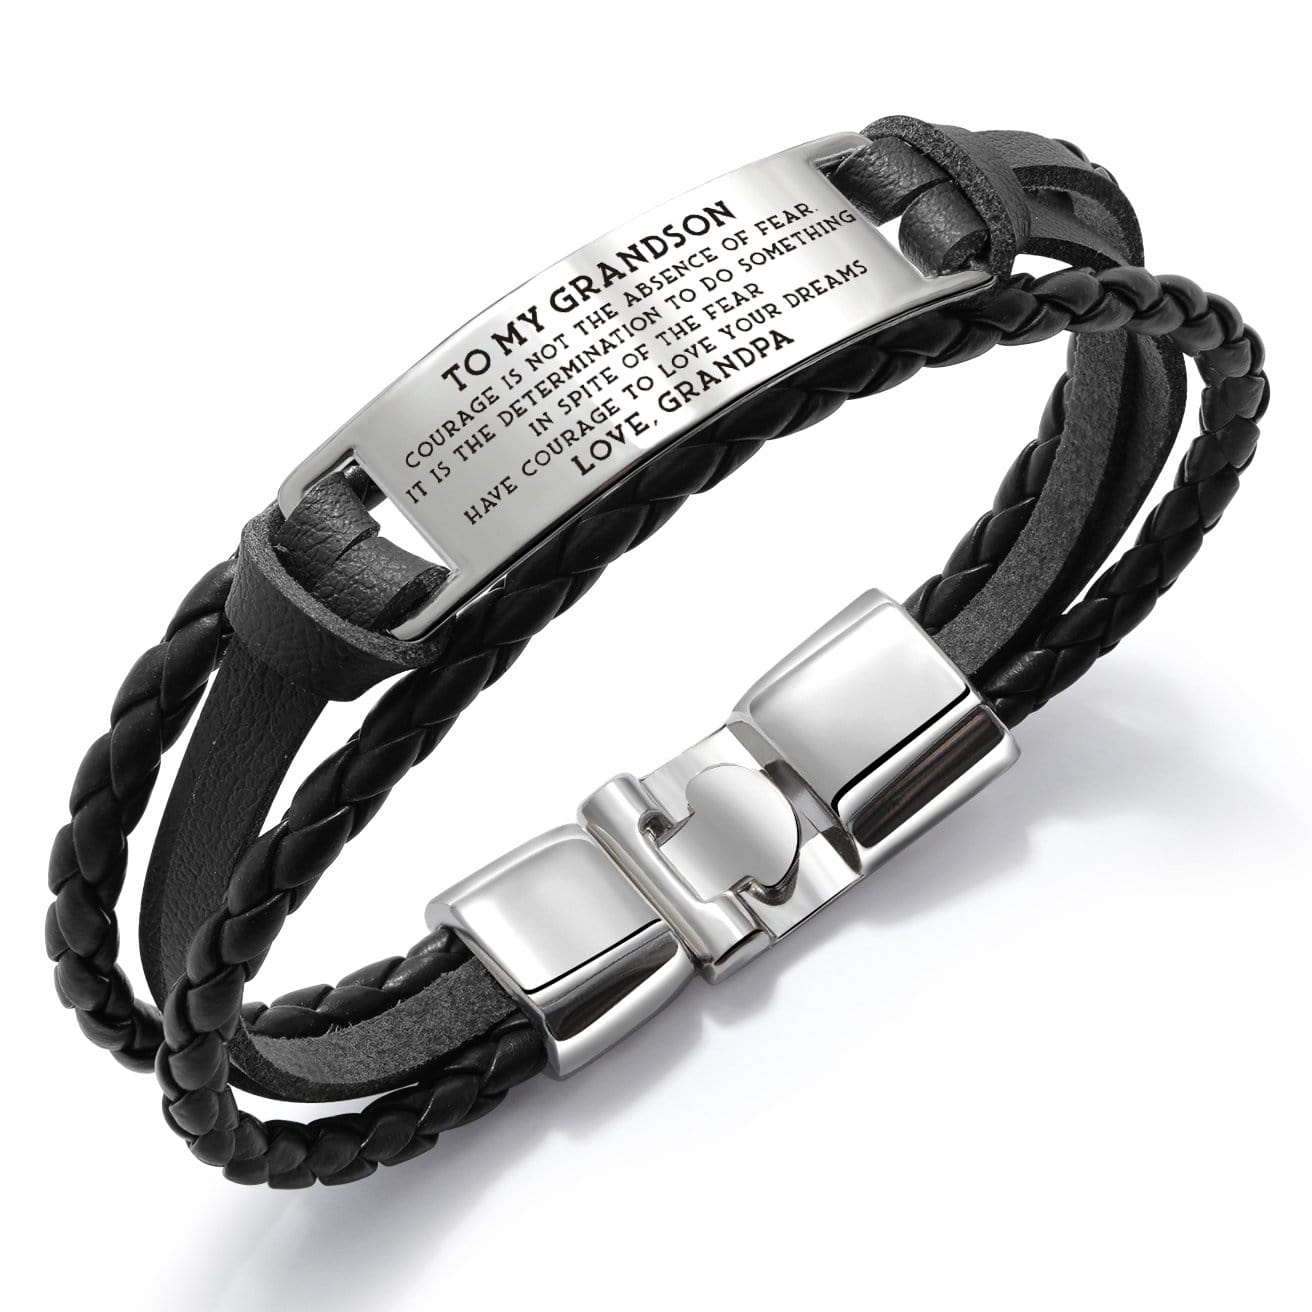 Bracelets Grandpa To Grandson - To Love Your Dreams Leather Bracelet Black GiveMe-Gifts